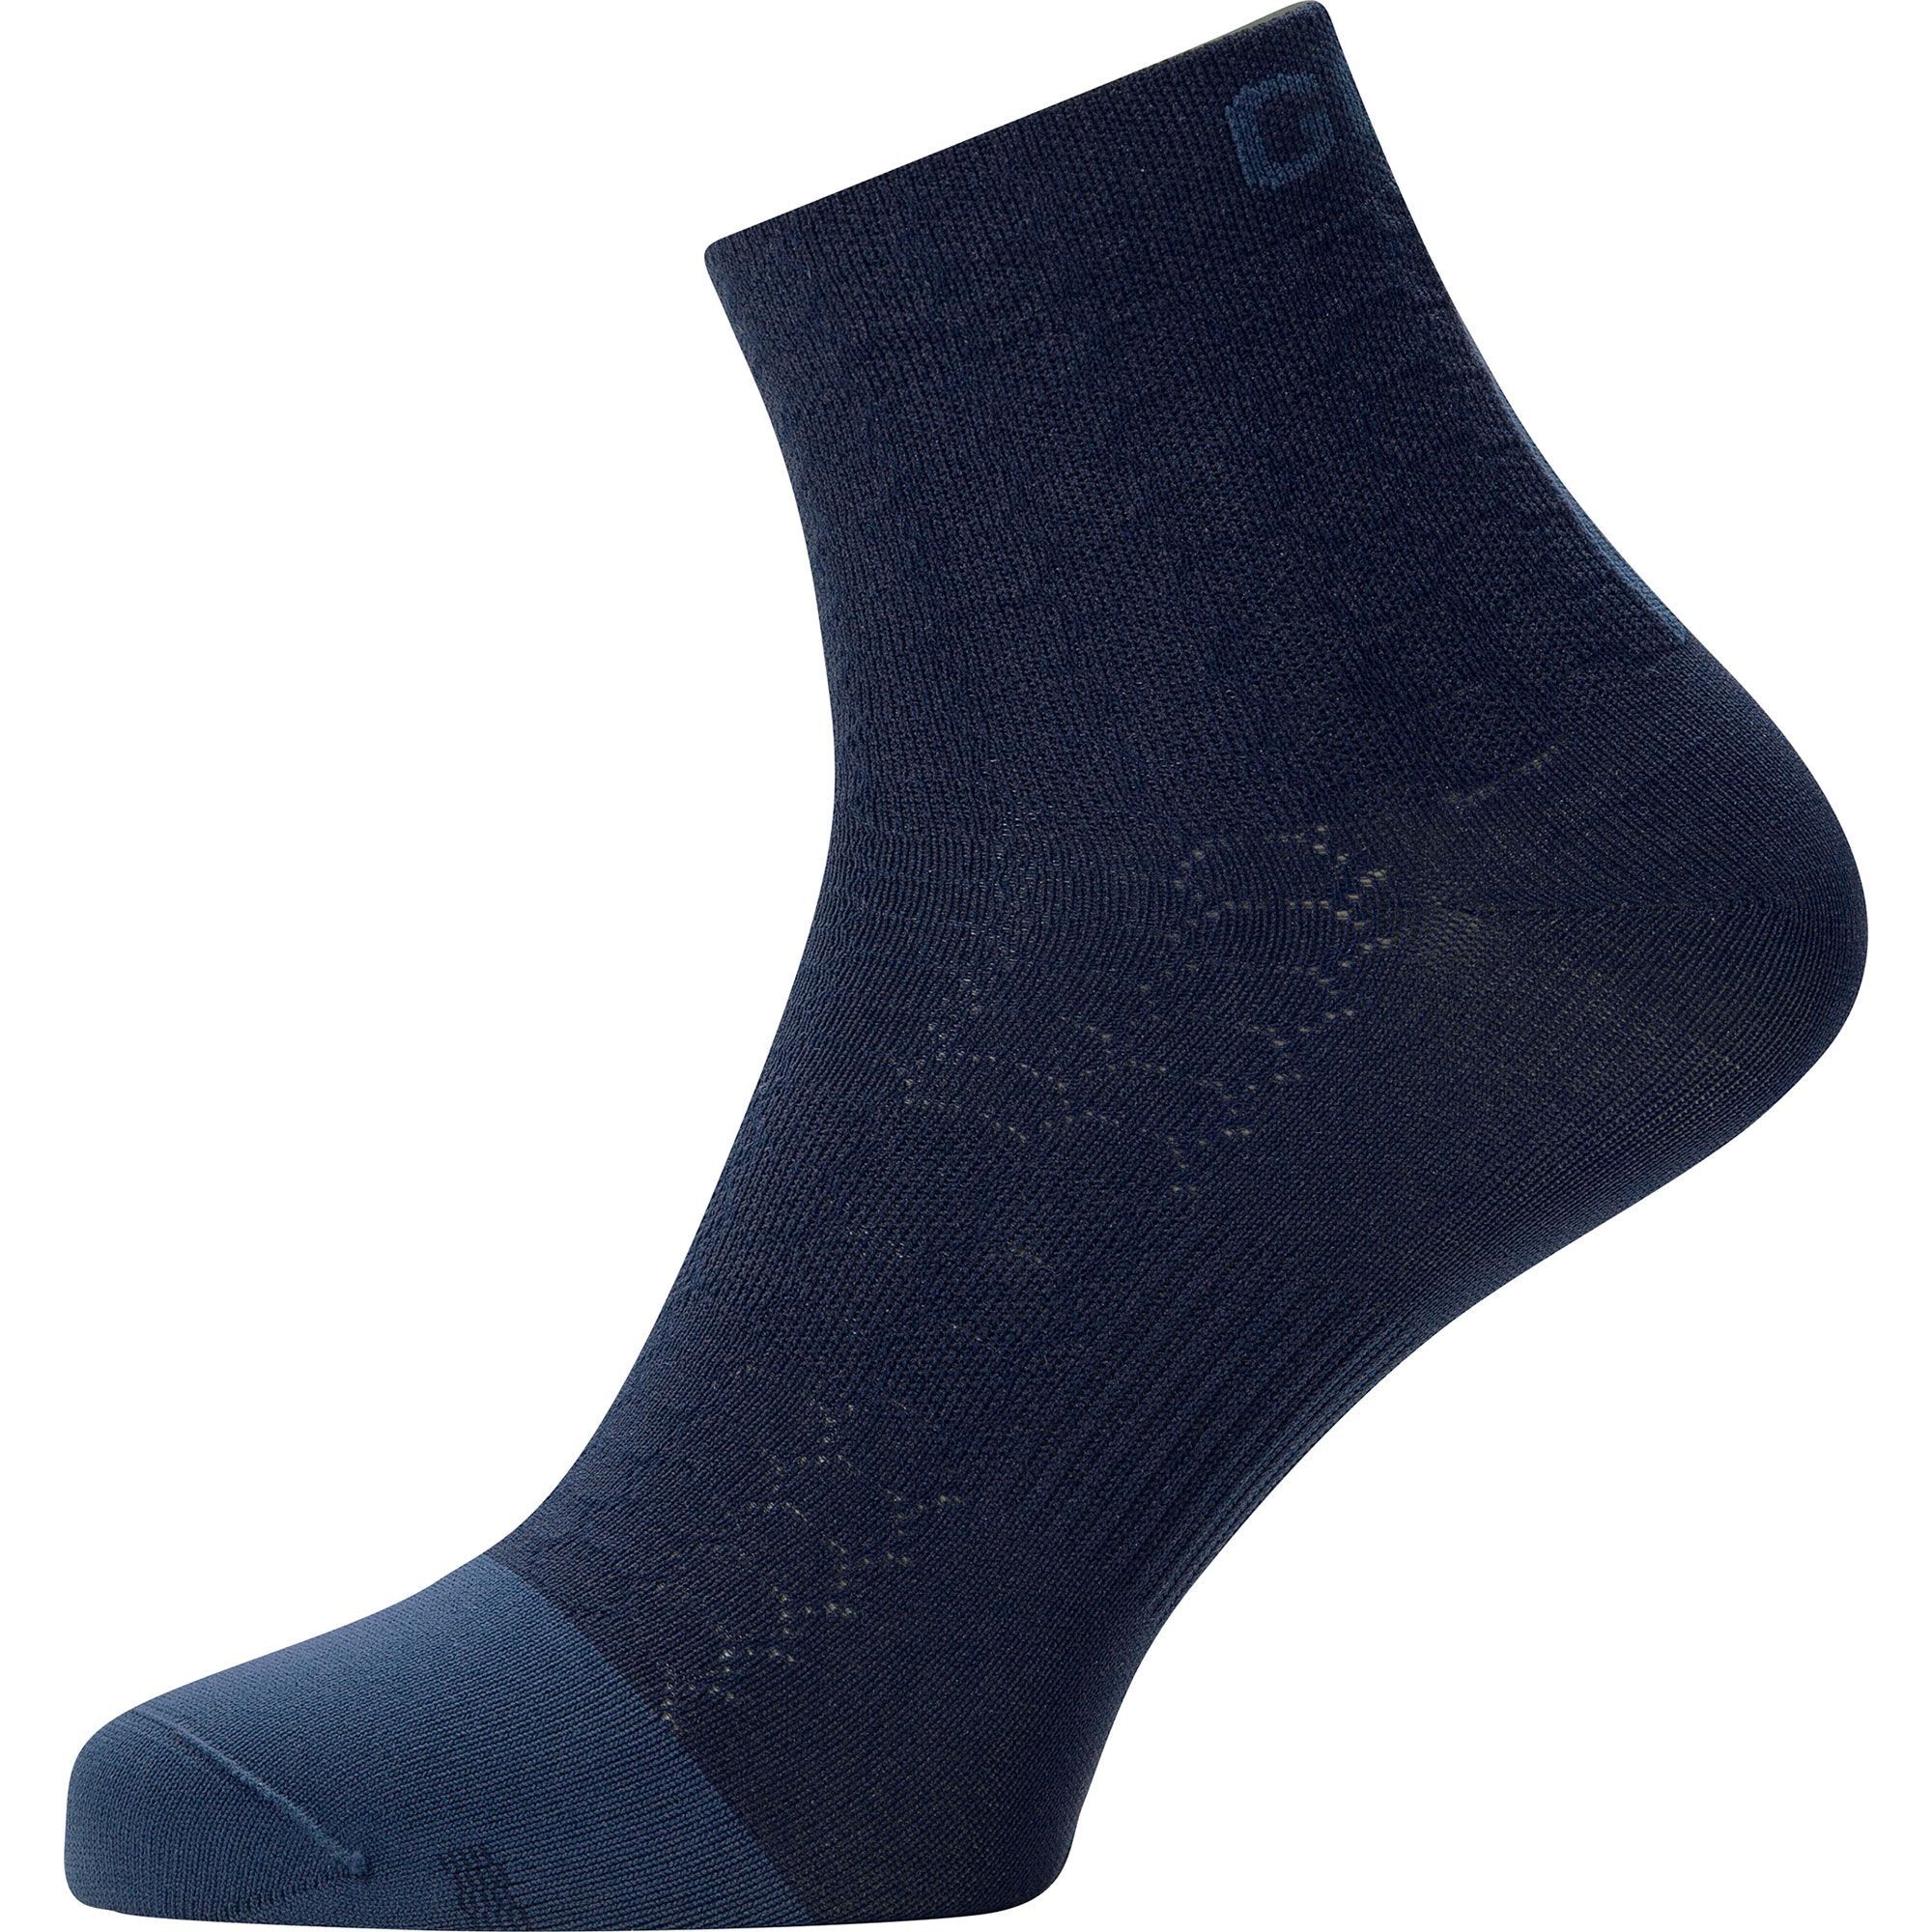 Gore Wear C7 Cancellara Socks - Cycling socks